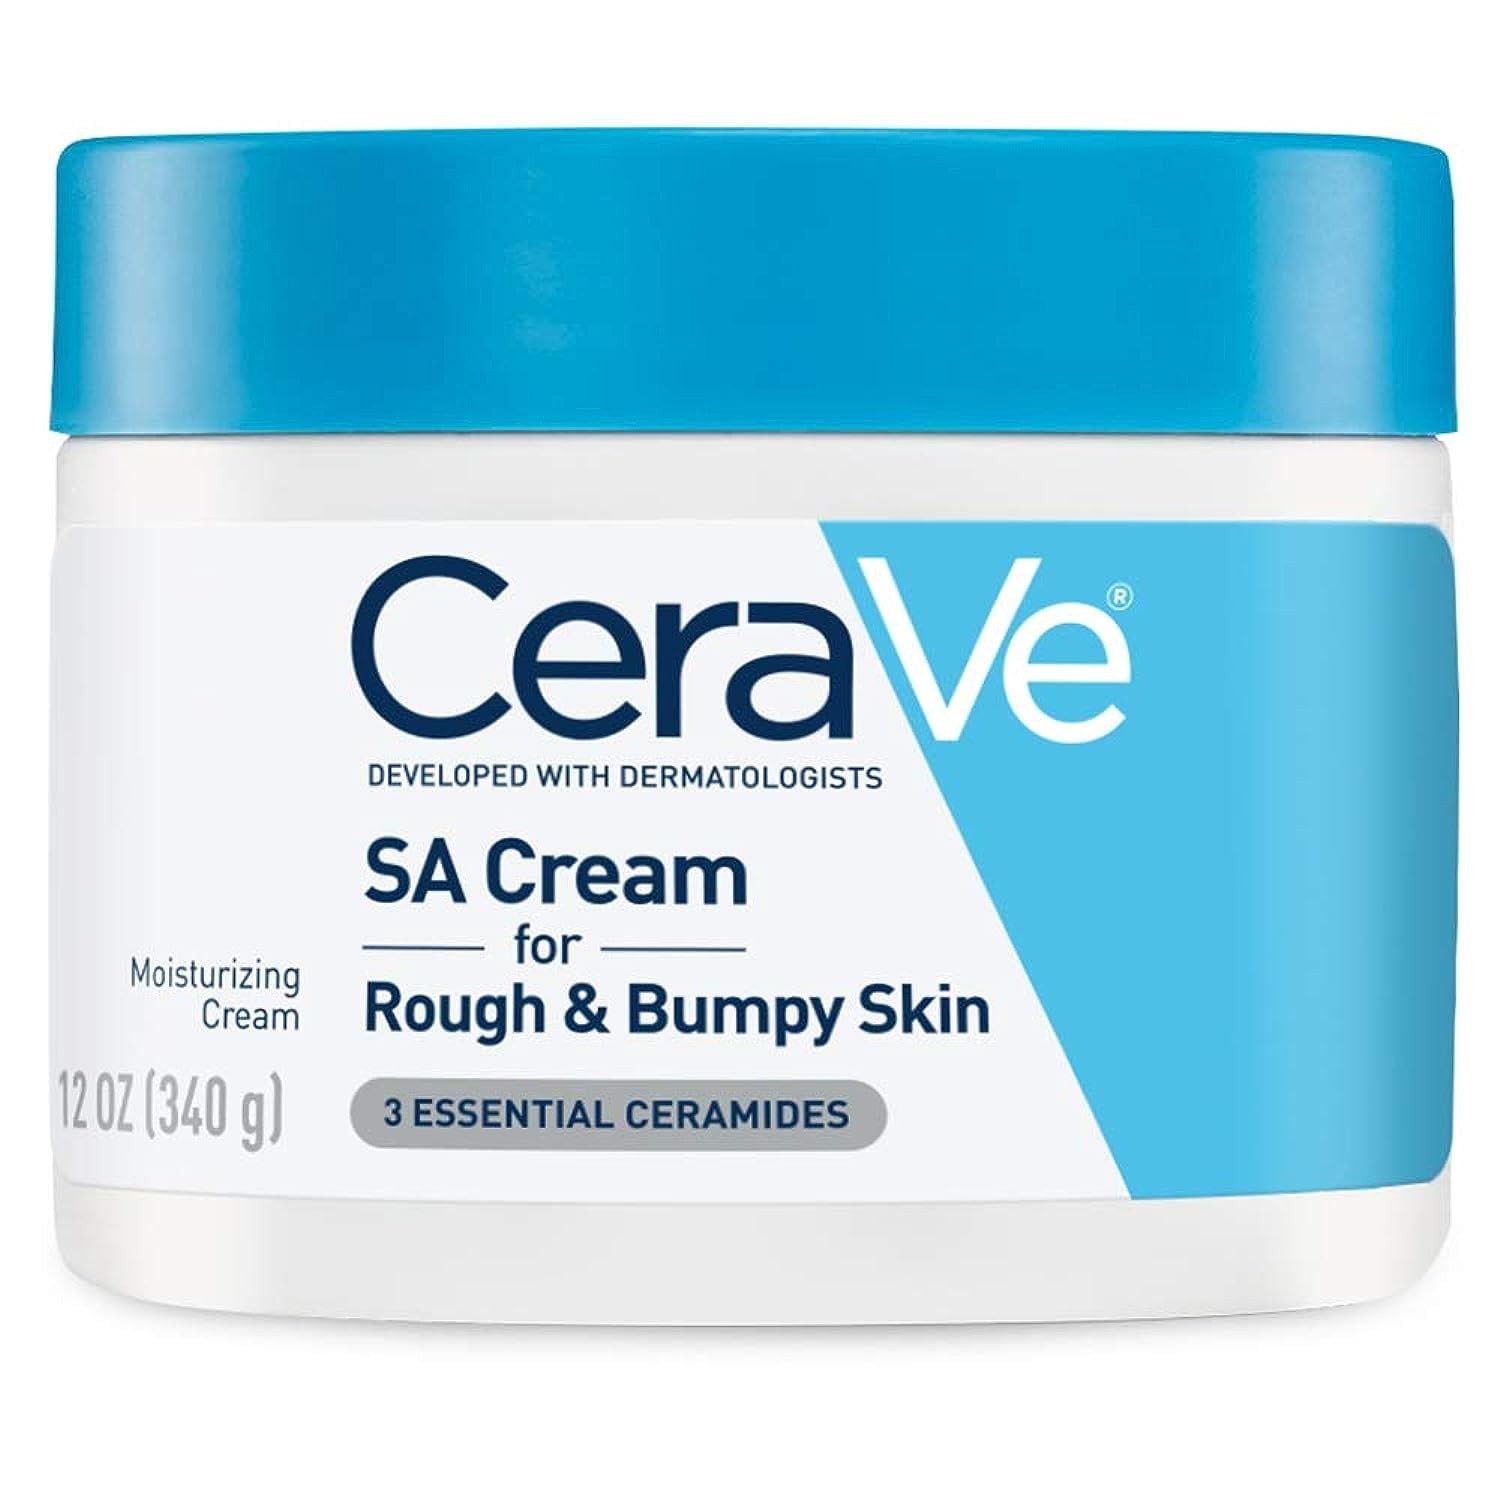 CeraVe Salicylic Acid Cream 12 oz for Rough and Bumpy Skin